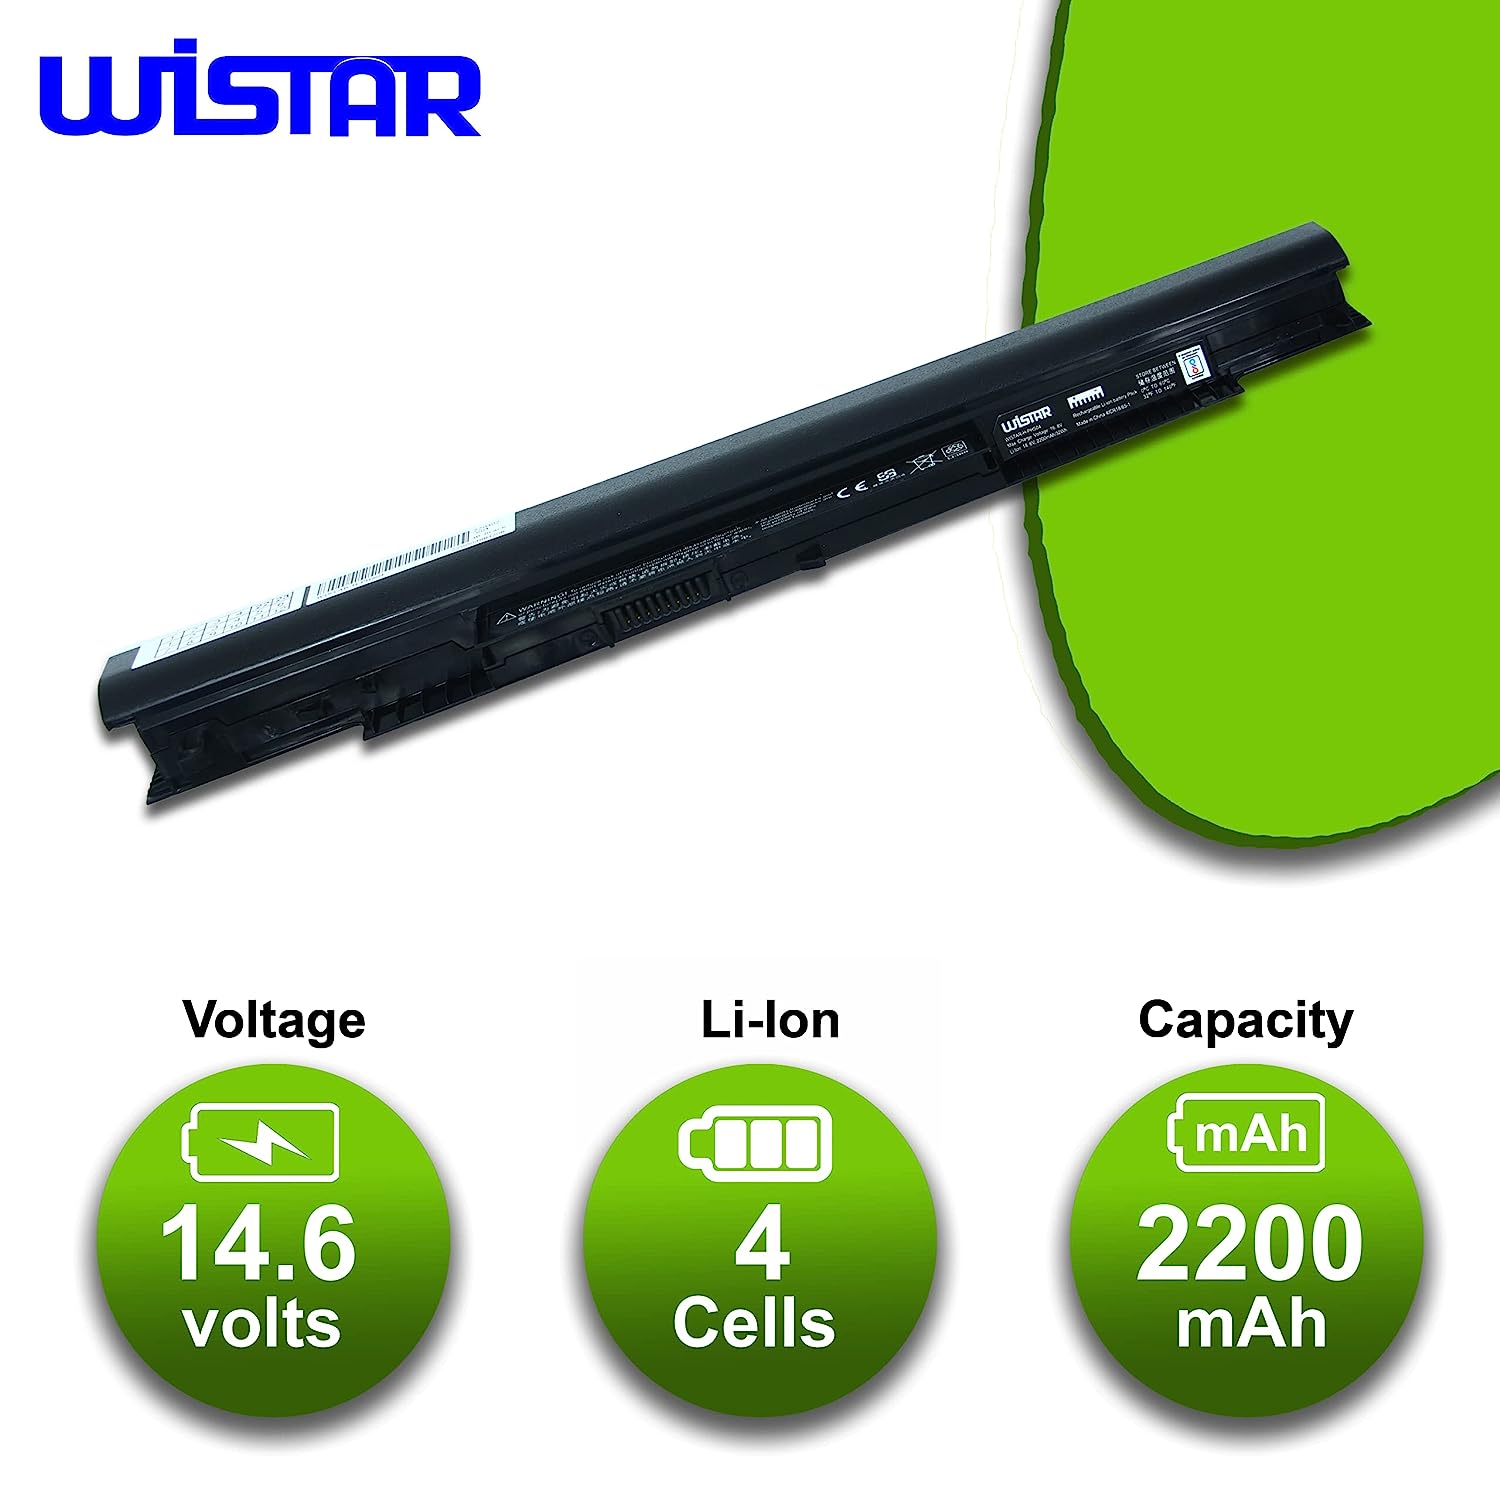 WISTAR HS04 Laptop Battery for HP 807956-001 807957-001 HS03 807612-421 807611-221 240 G4 HSTNN-LB6U HSTNN-DB7I HSTNN-LB6V TPN-I119 807611-421 807611-131